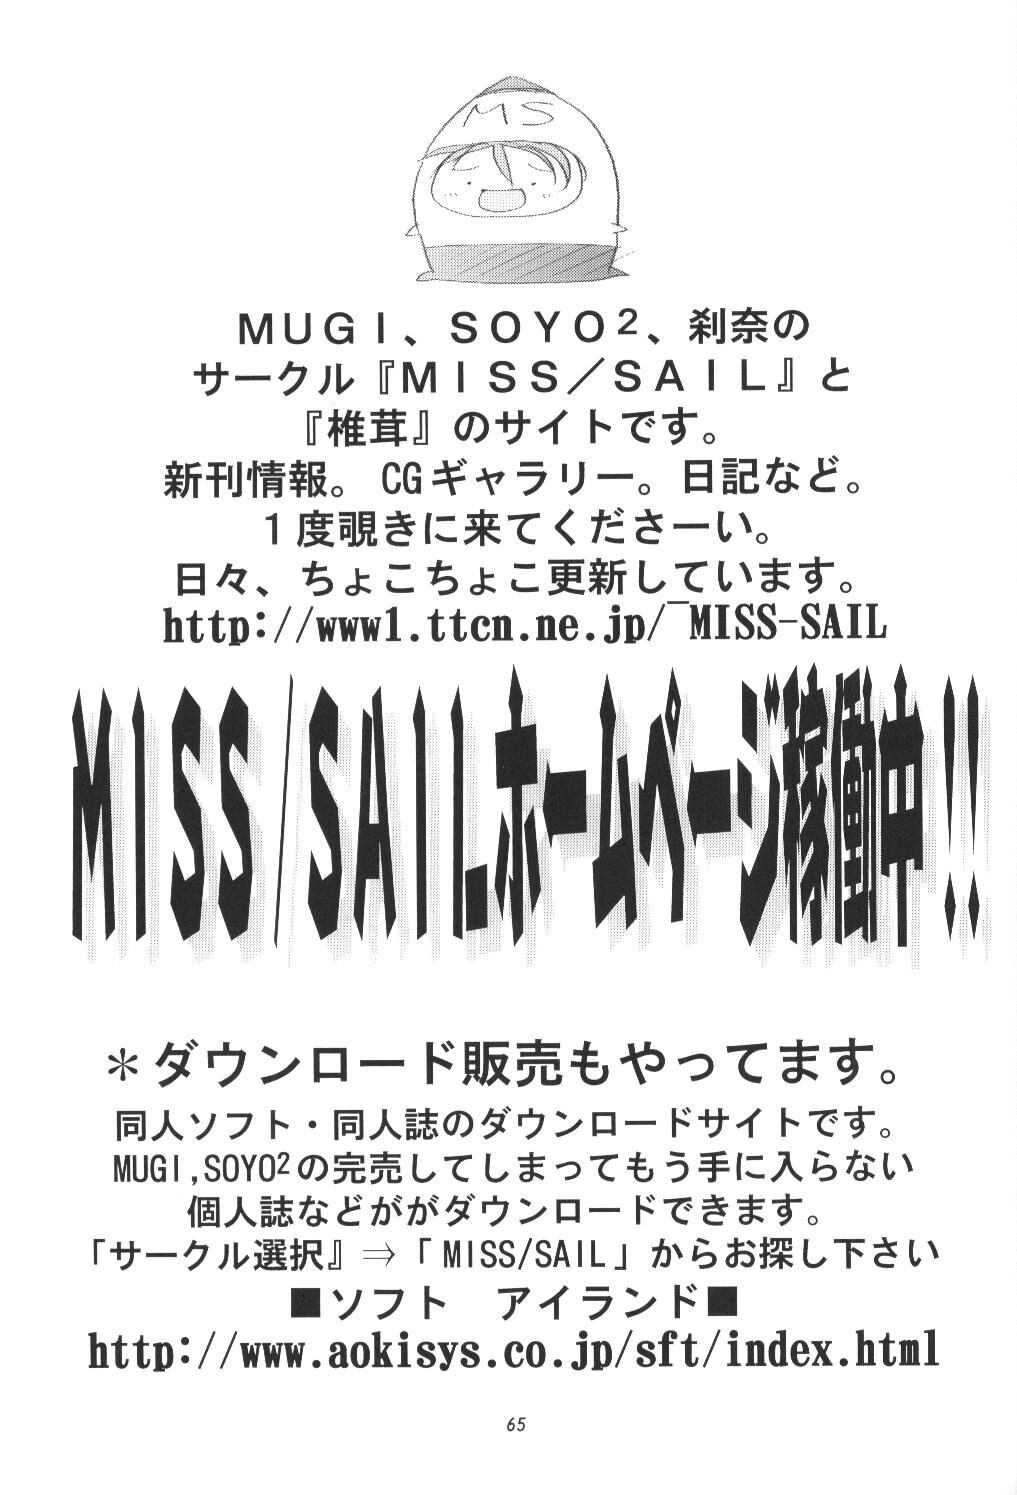 [Miss Sail] Love Missile (Evangelion) 